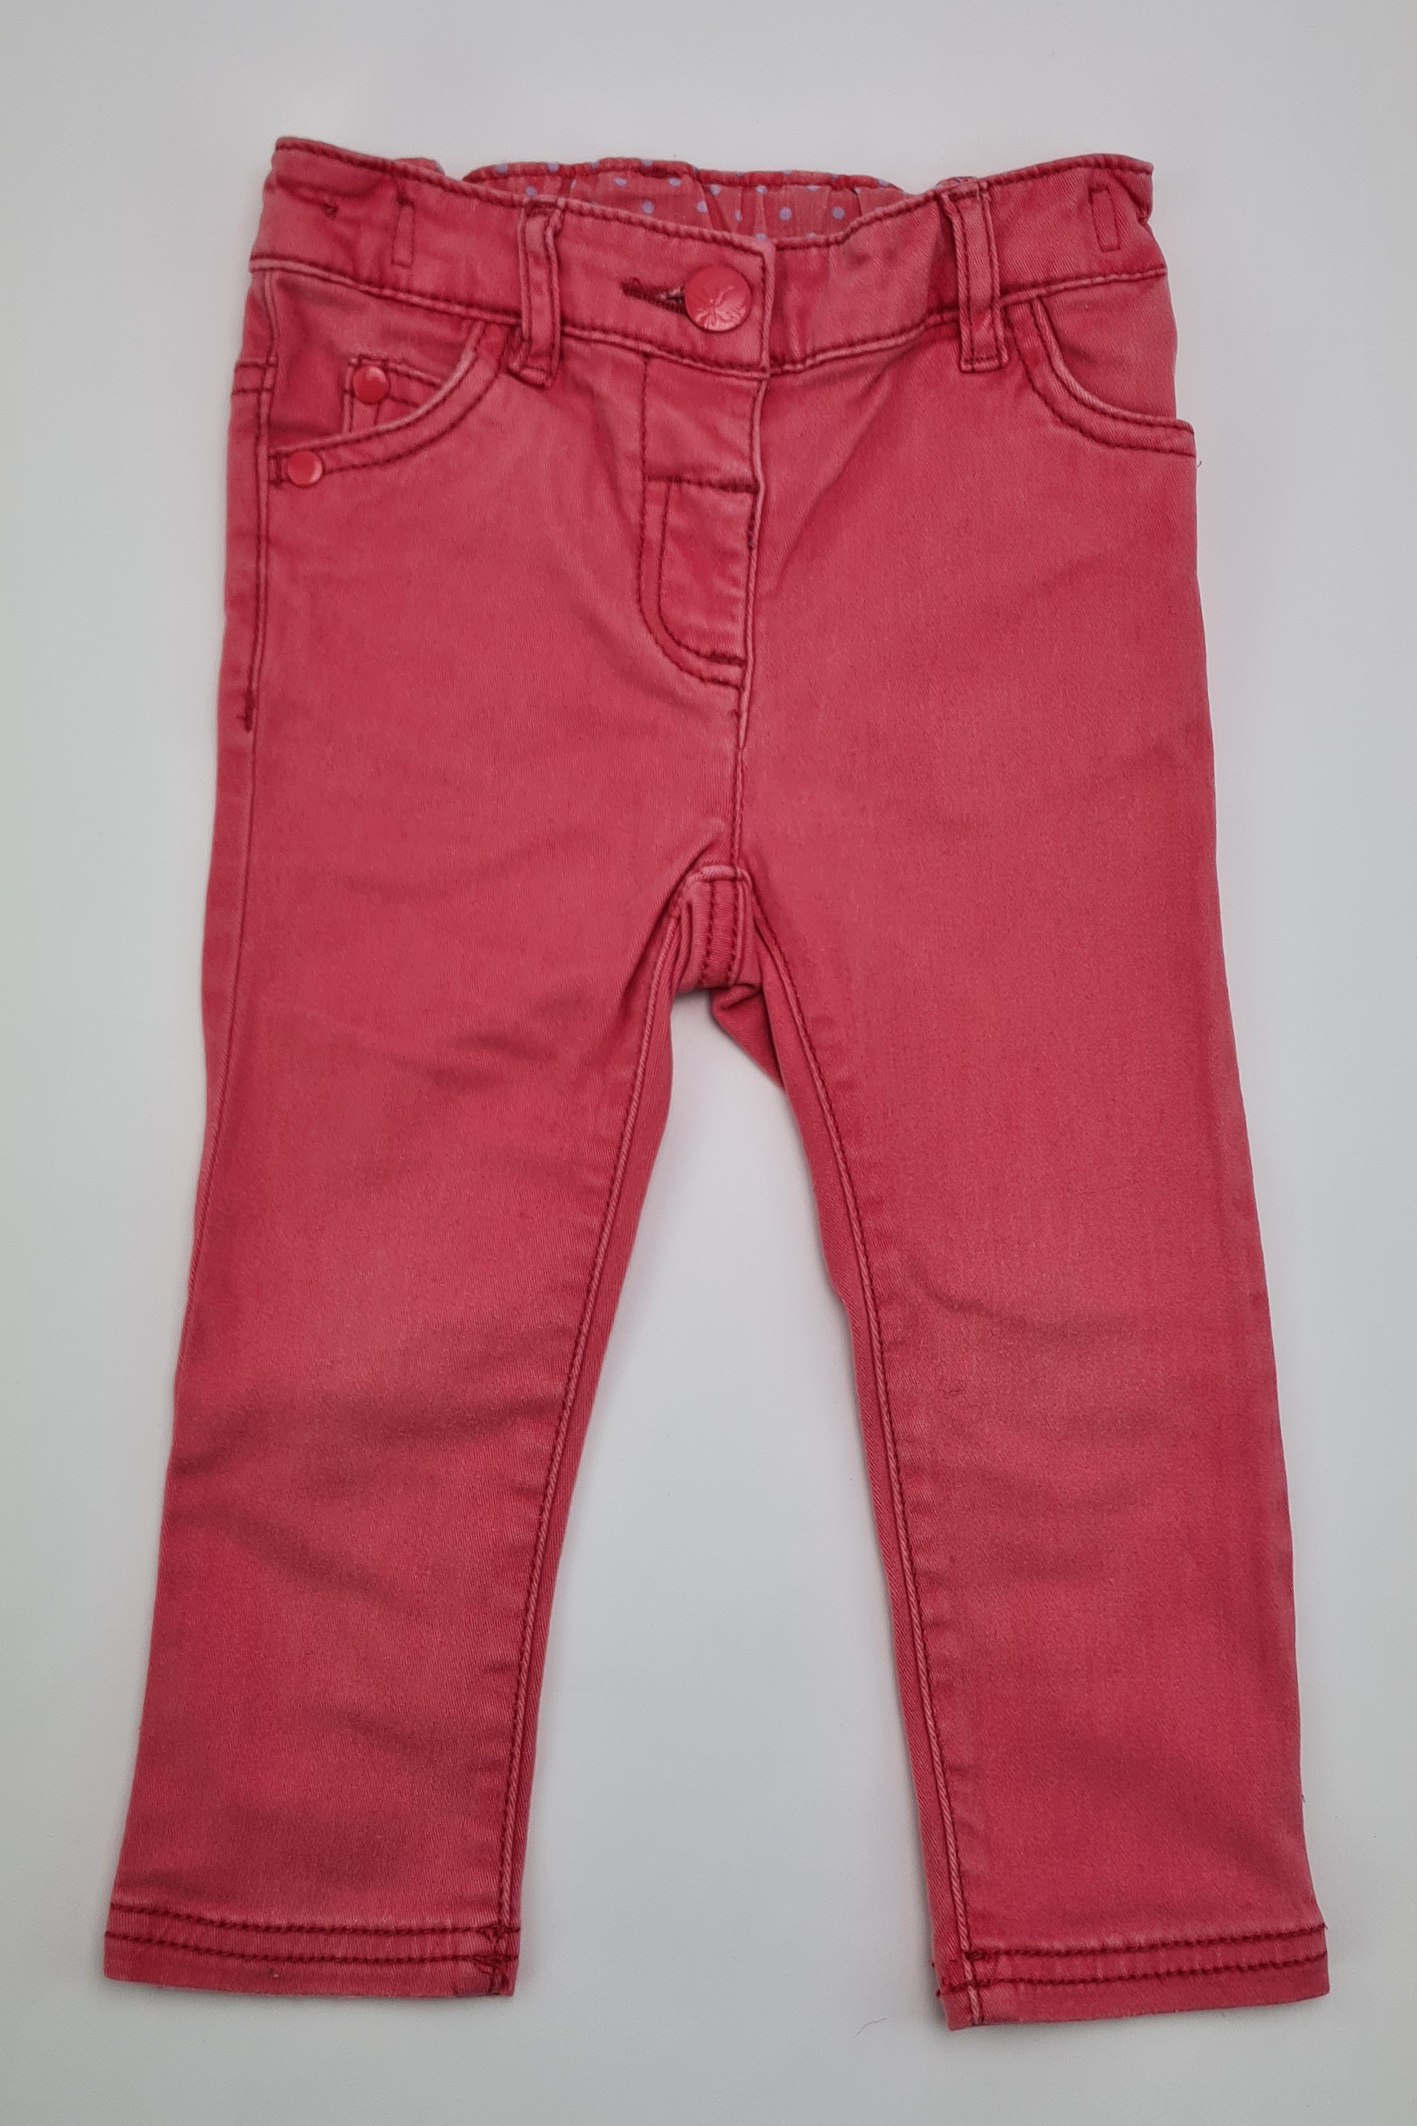 12-18m - Pink Jeans (Next)